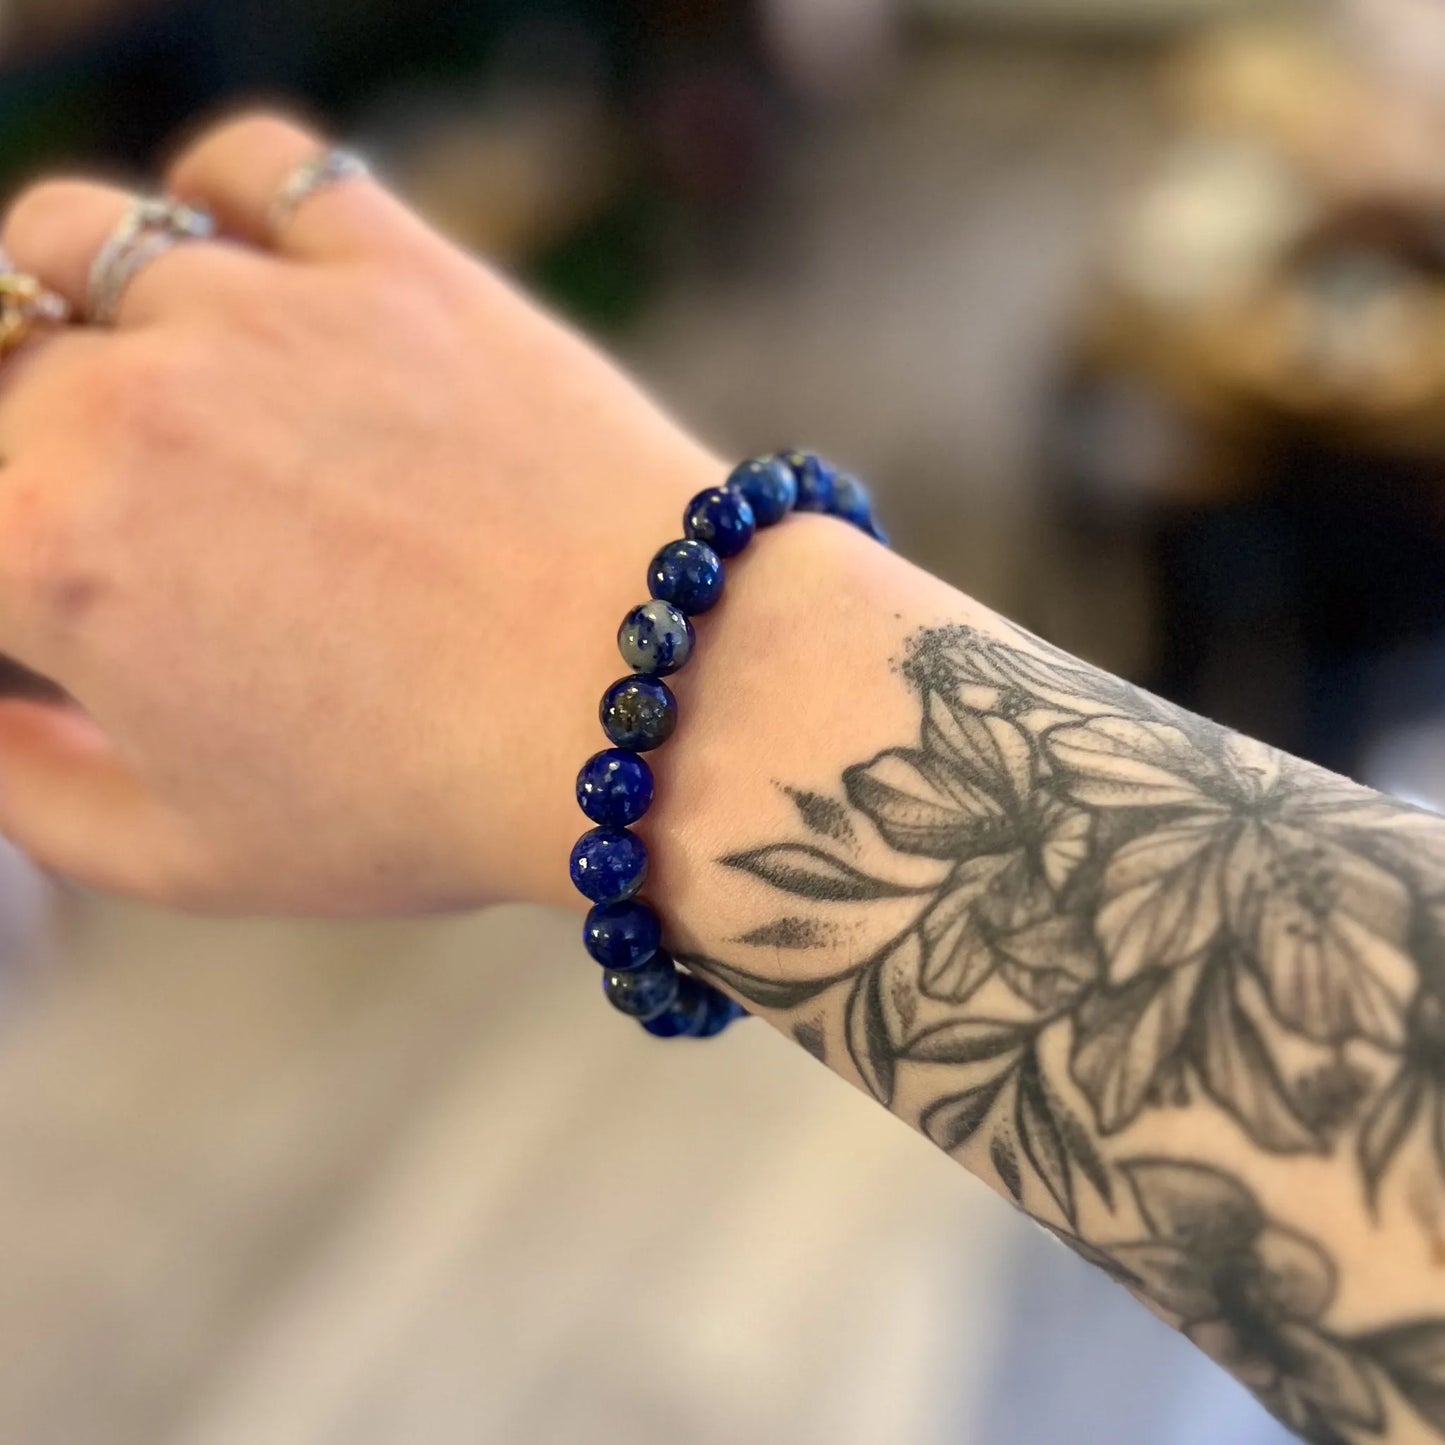 Lapis Lazuli Bead Bracelet